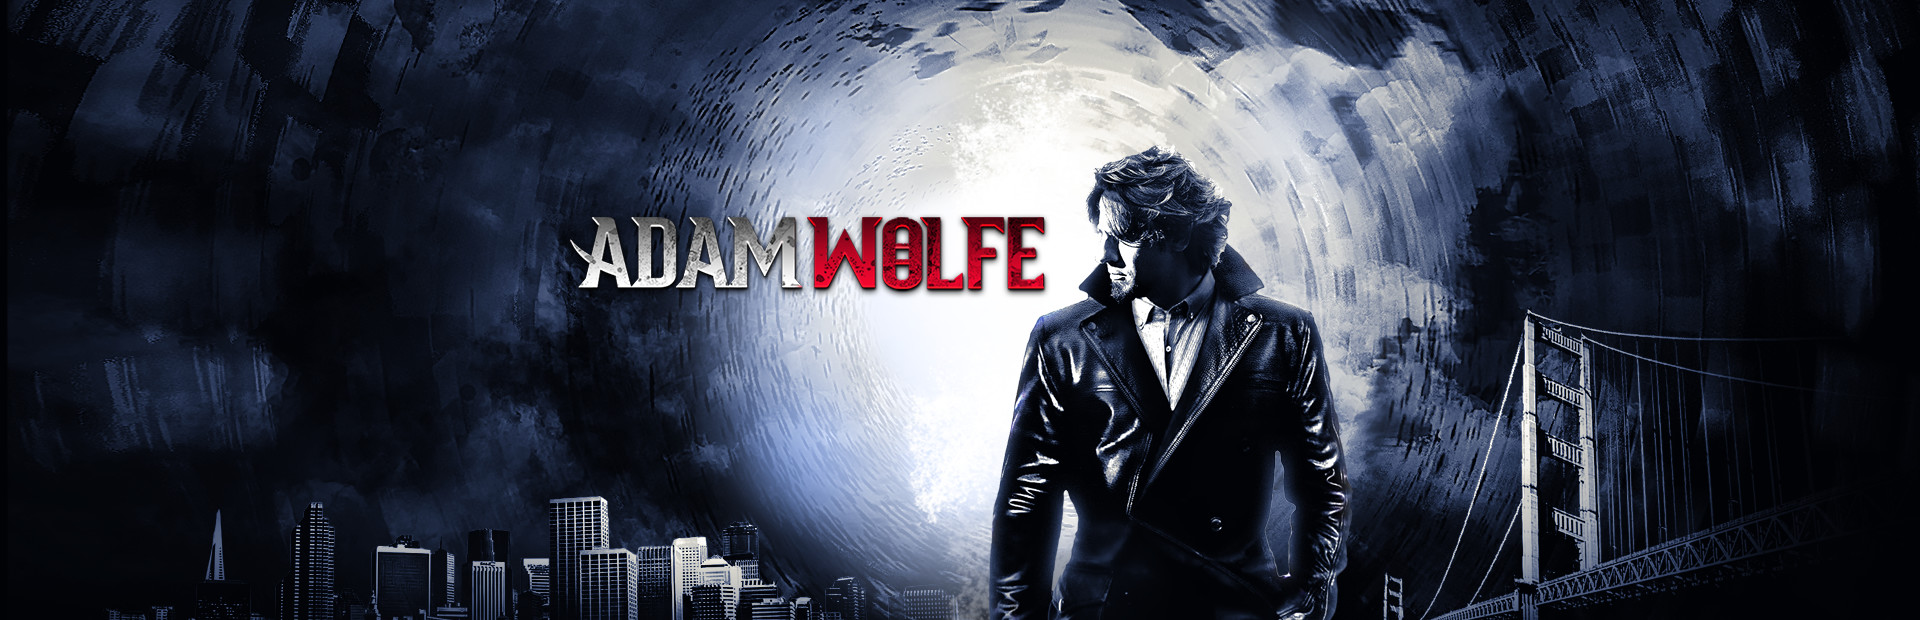 Adam Wolfe cover image